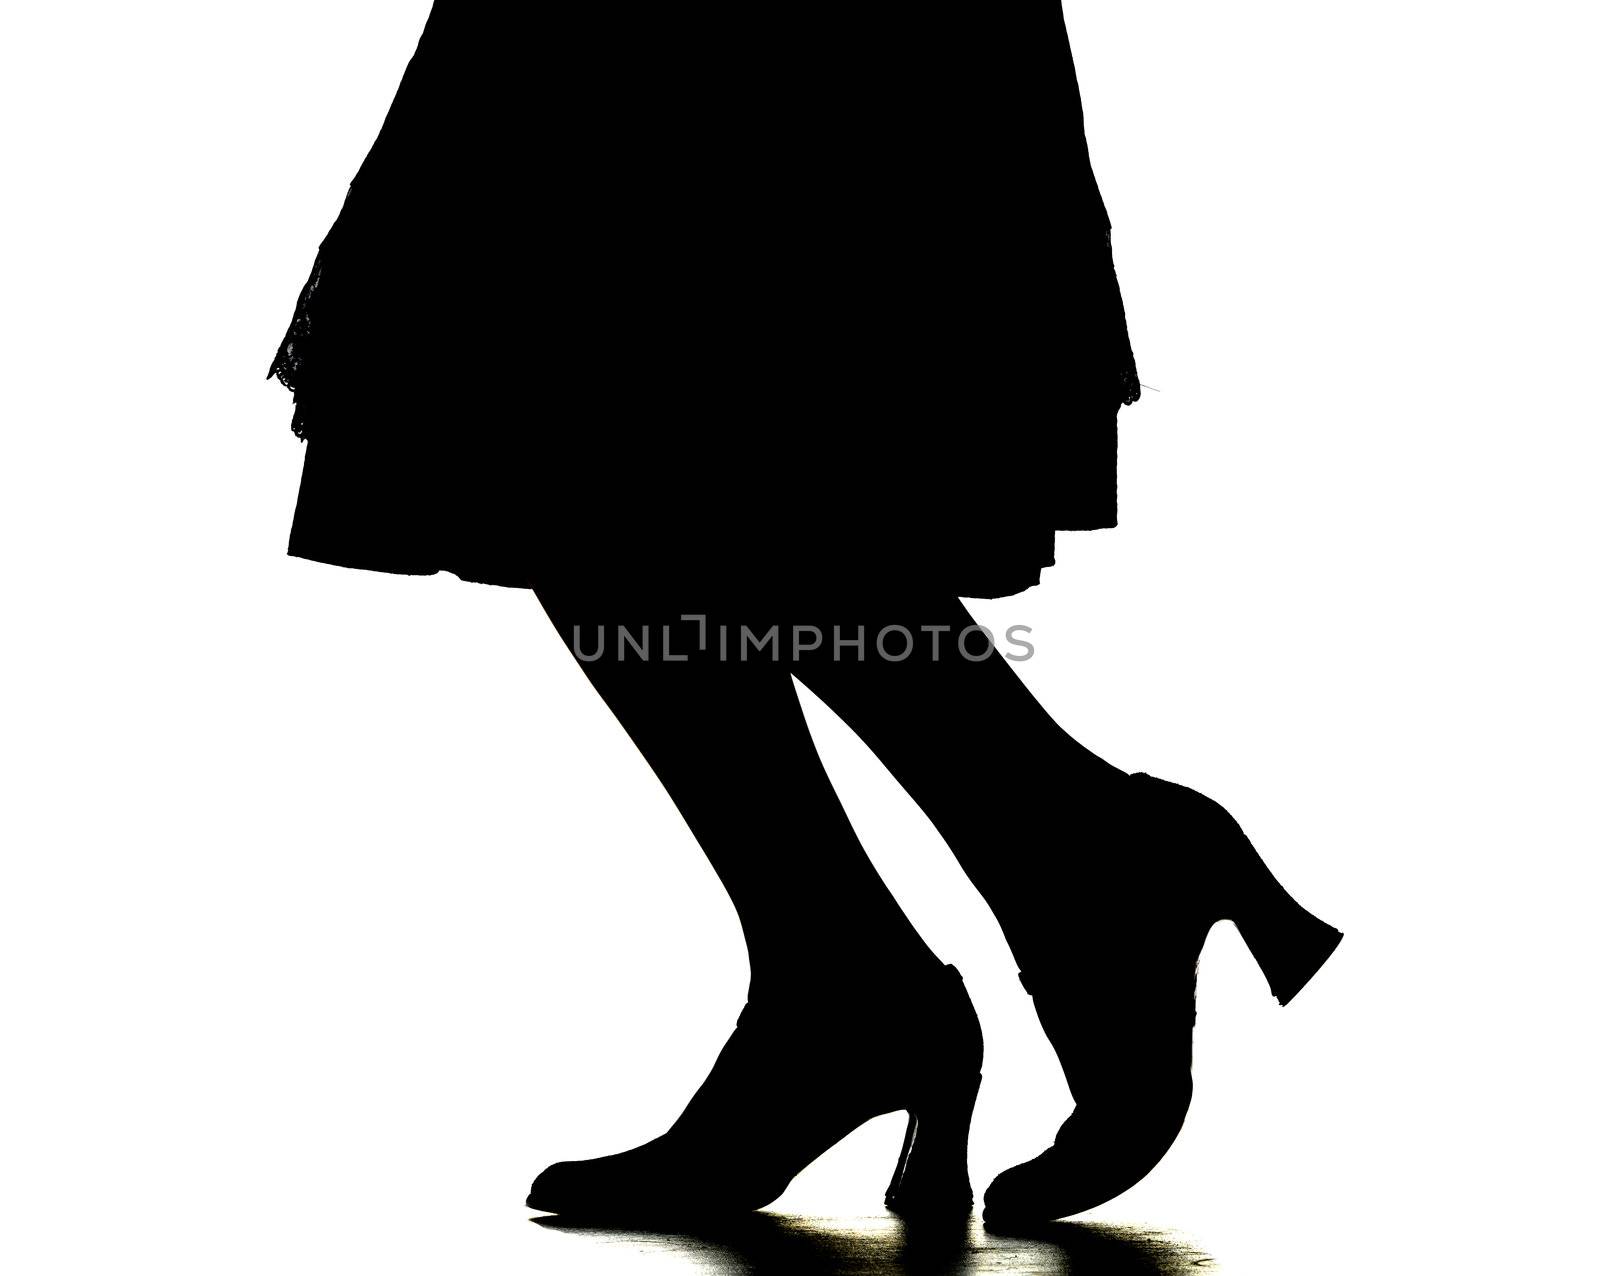 a woman's silhouette by gemenacom